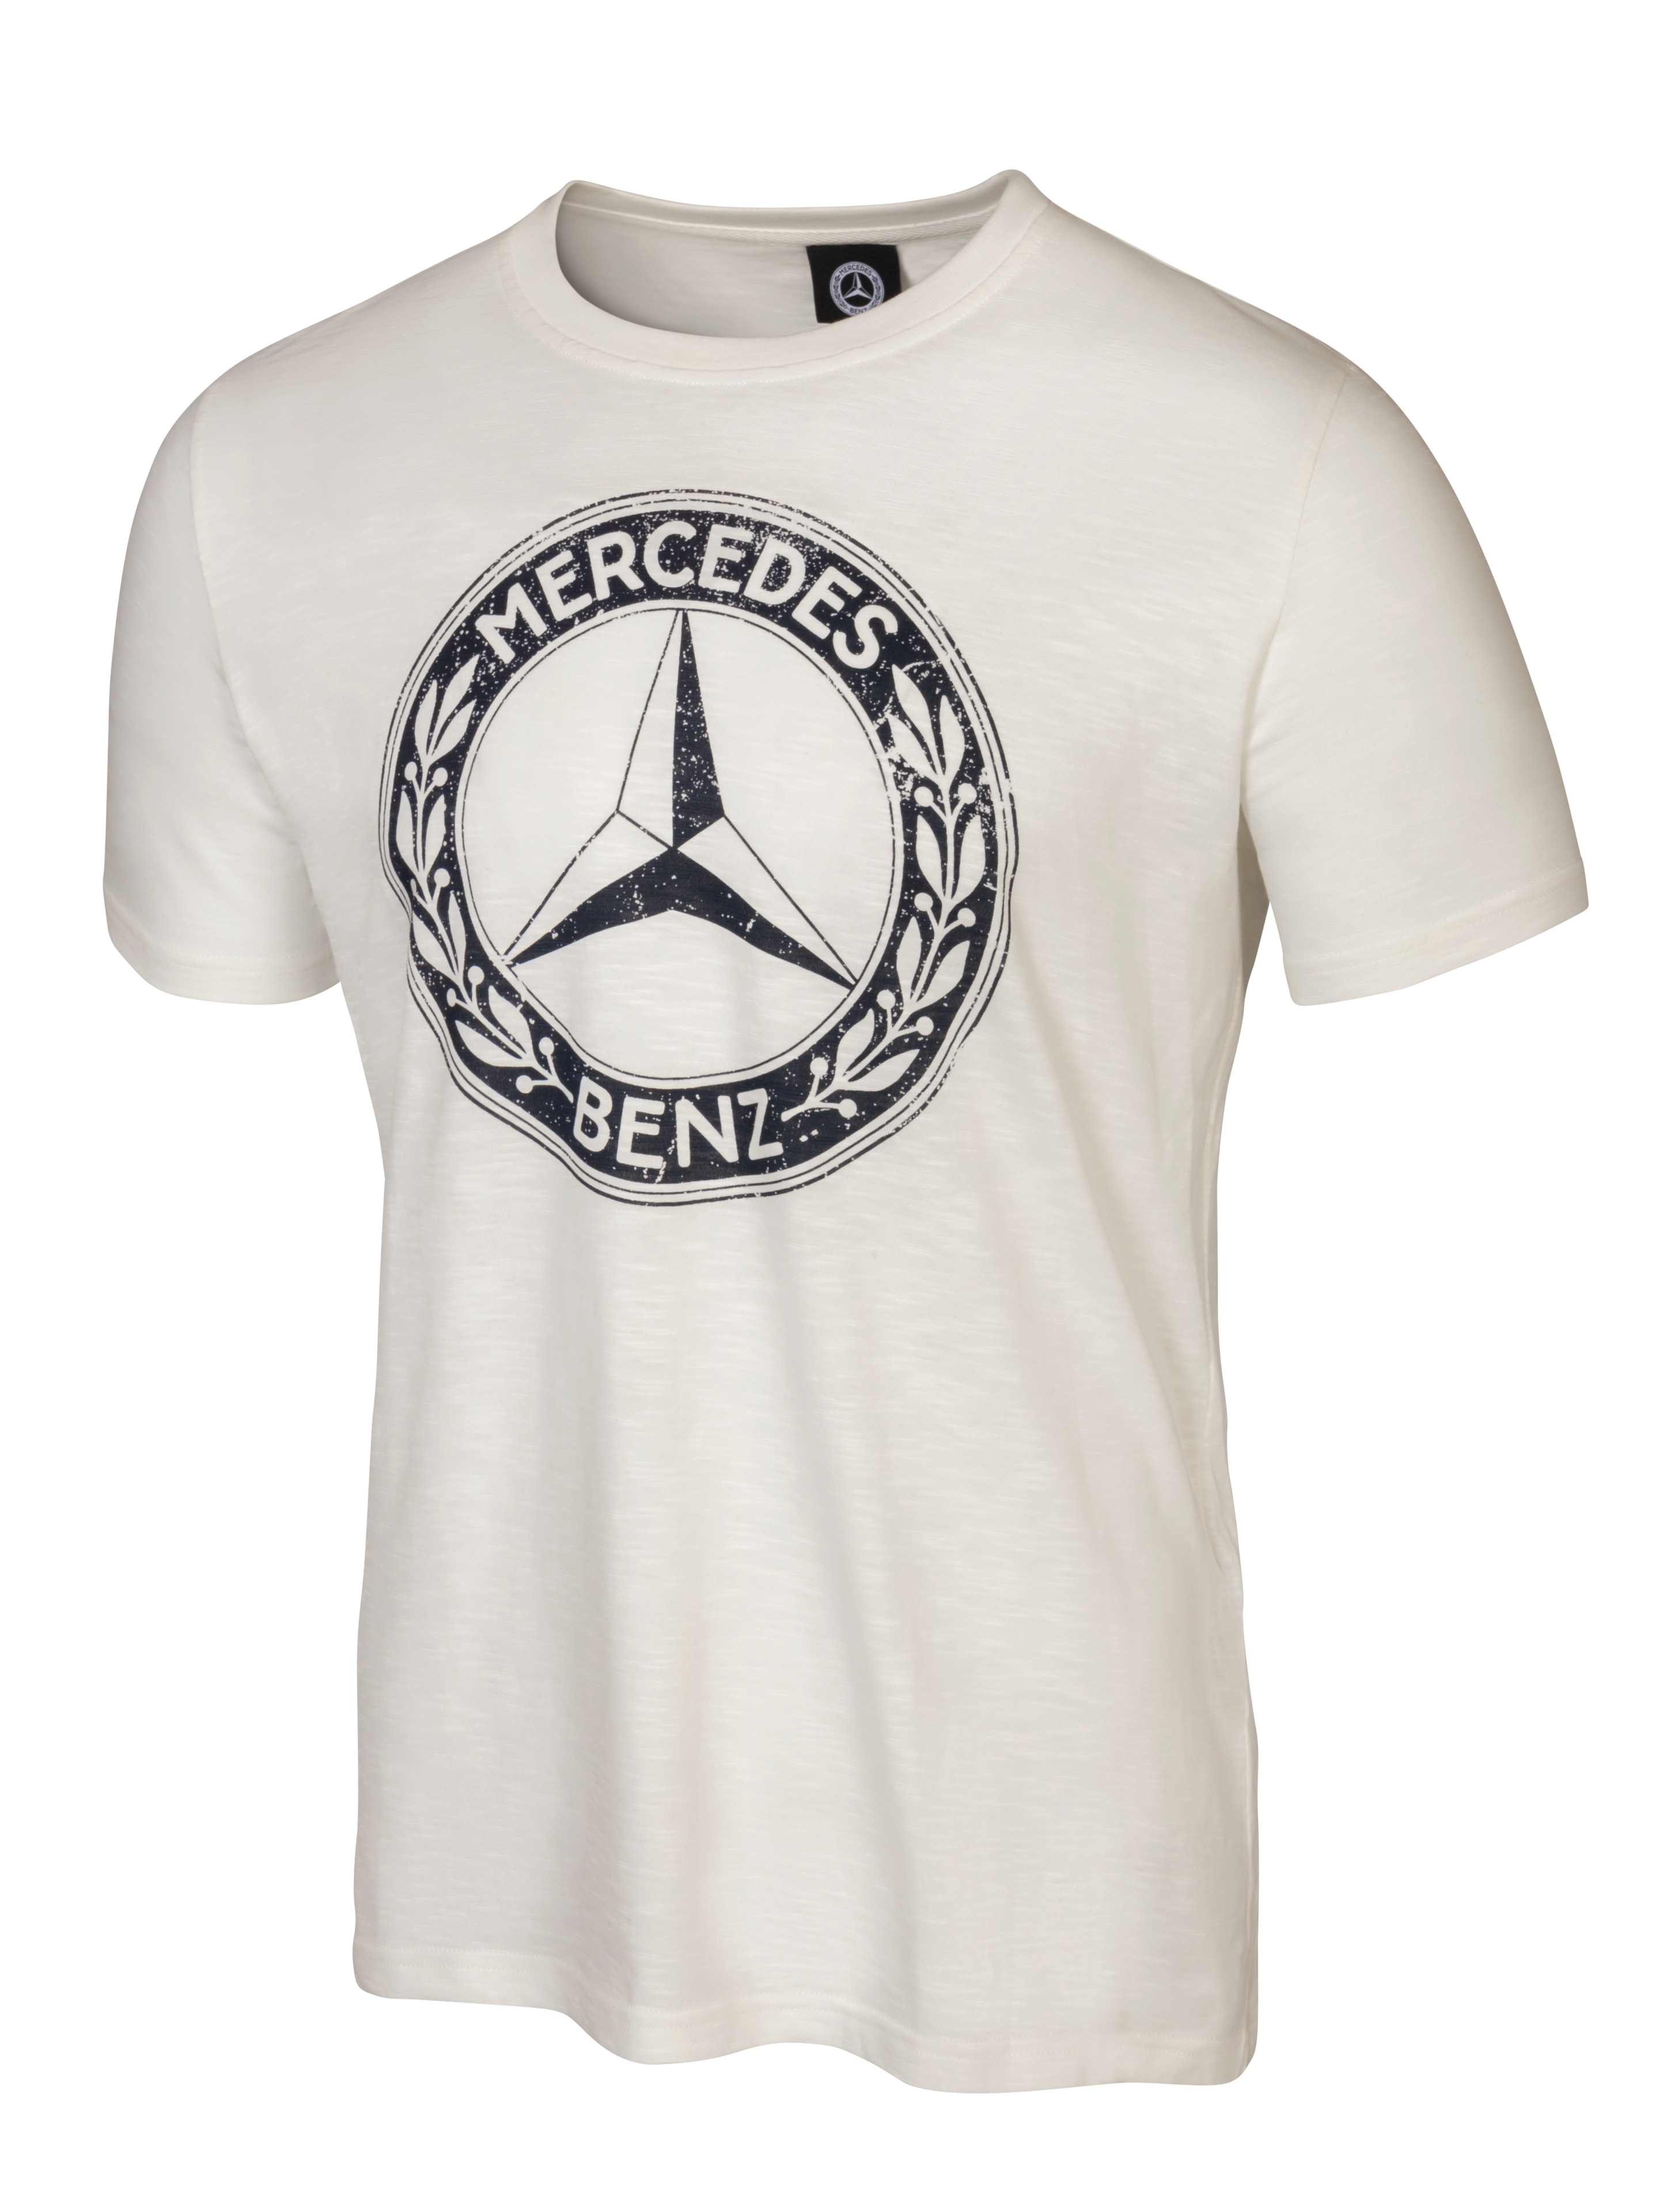 T-Shirt Herren - offwhite, S